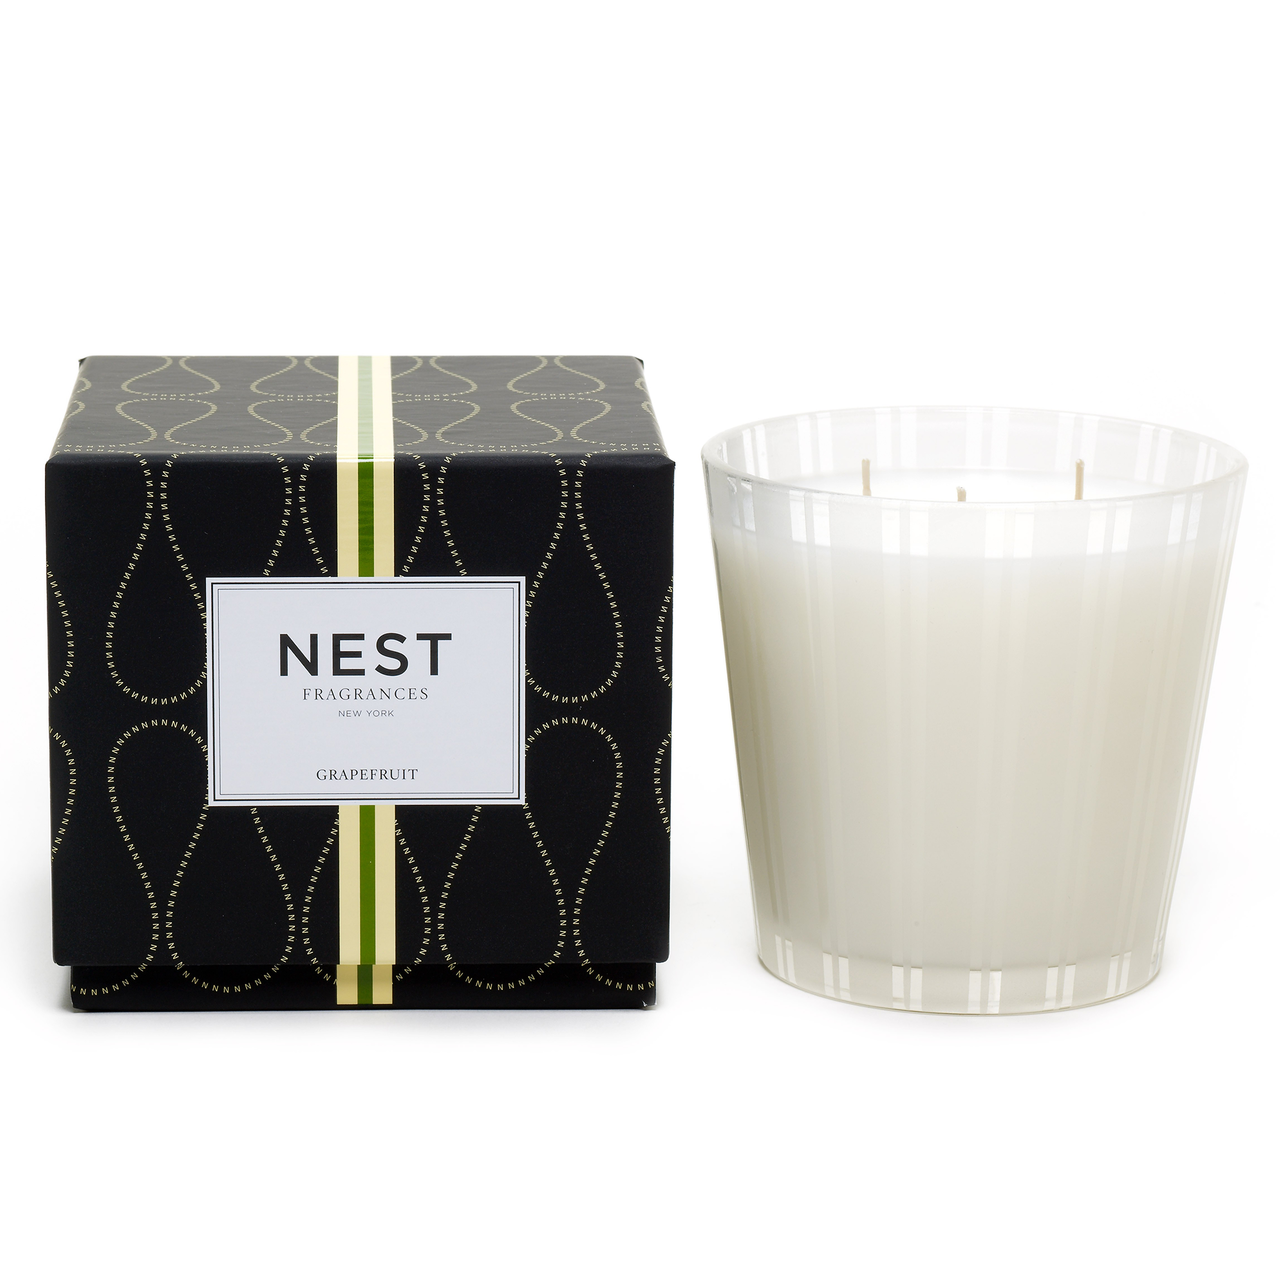 Nest Fragrances Grapefruit 3-Wick Candle